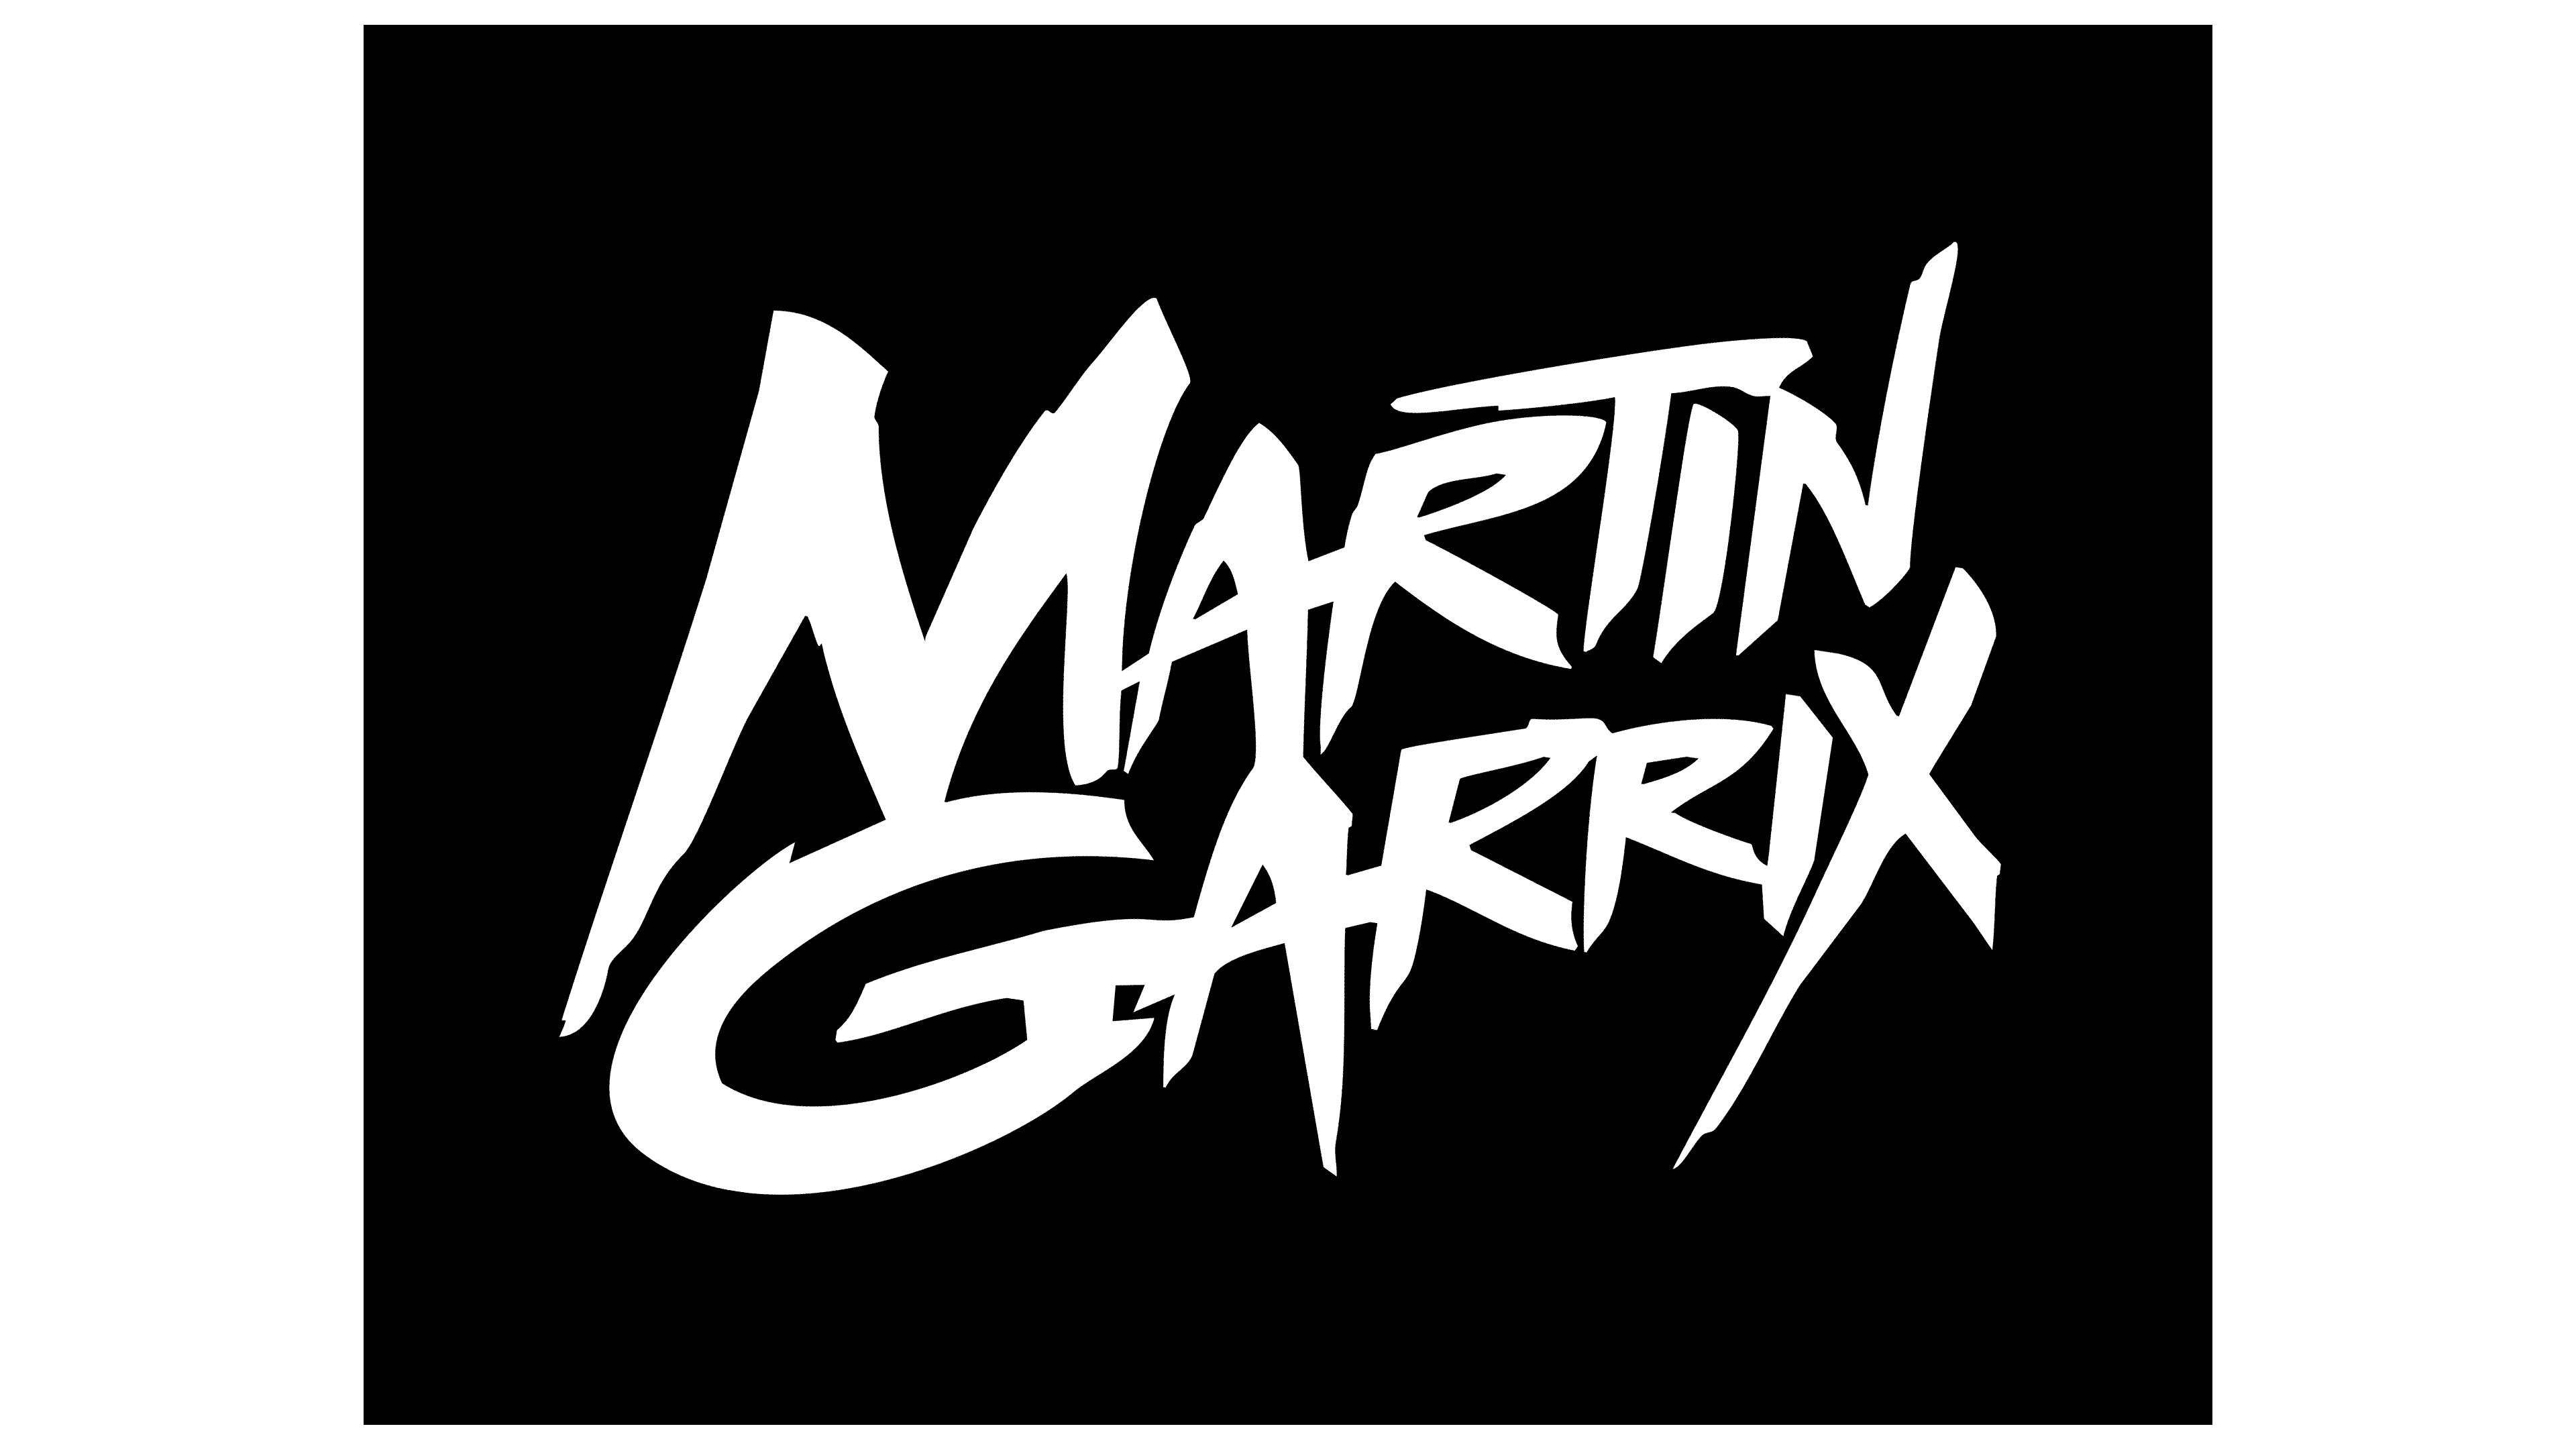 martin garrix logo png